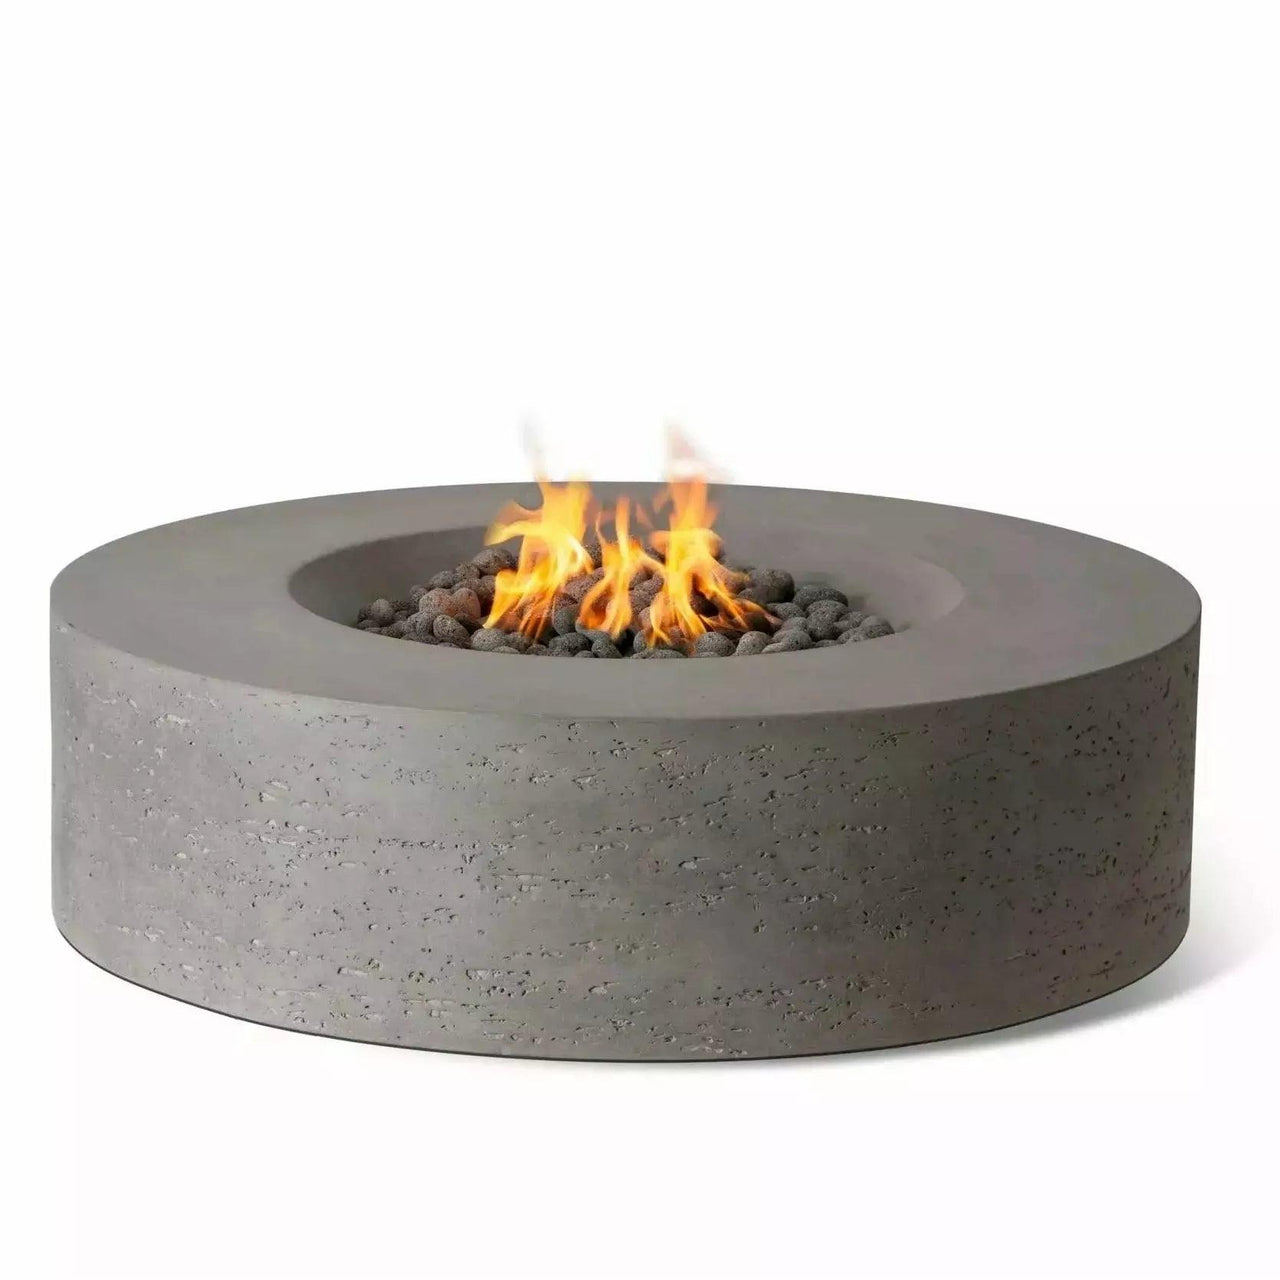 PyroMania Fire - Genesis Round Concrete Fire Pit Table - Fire Pit Stock